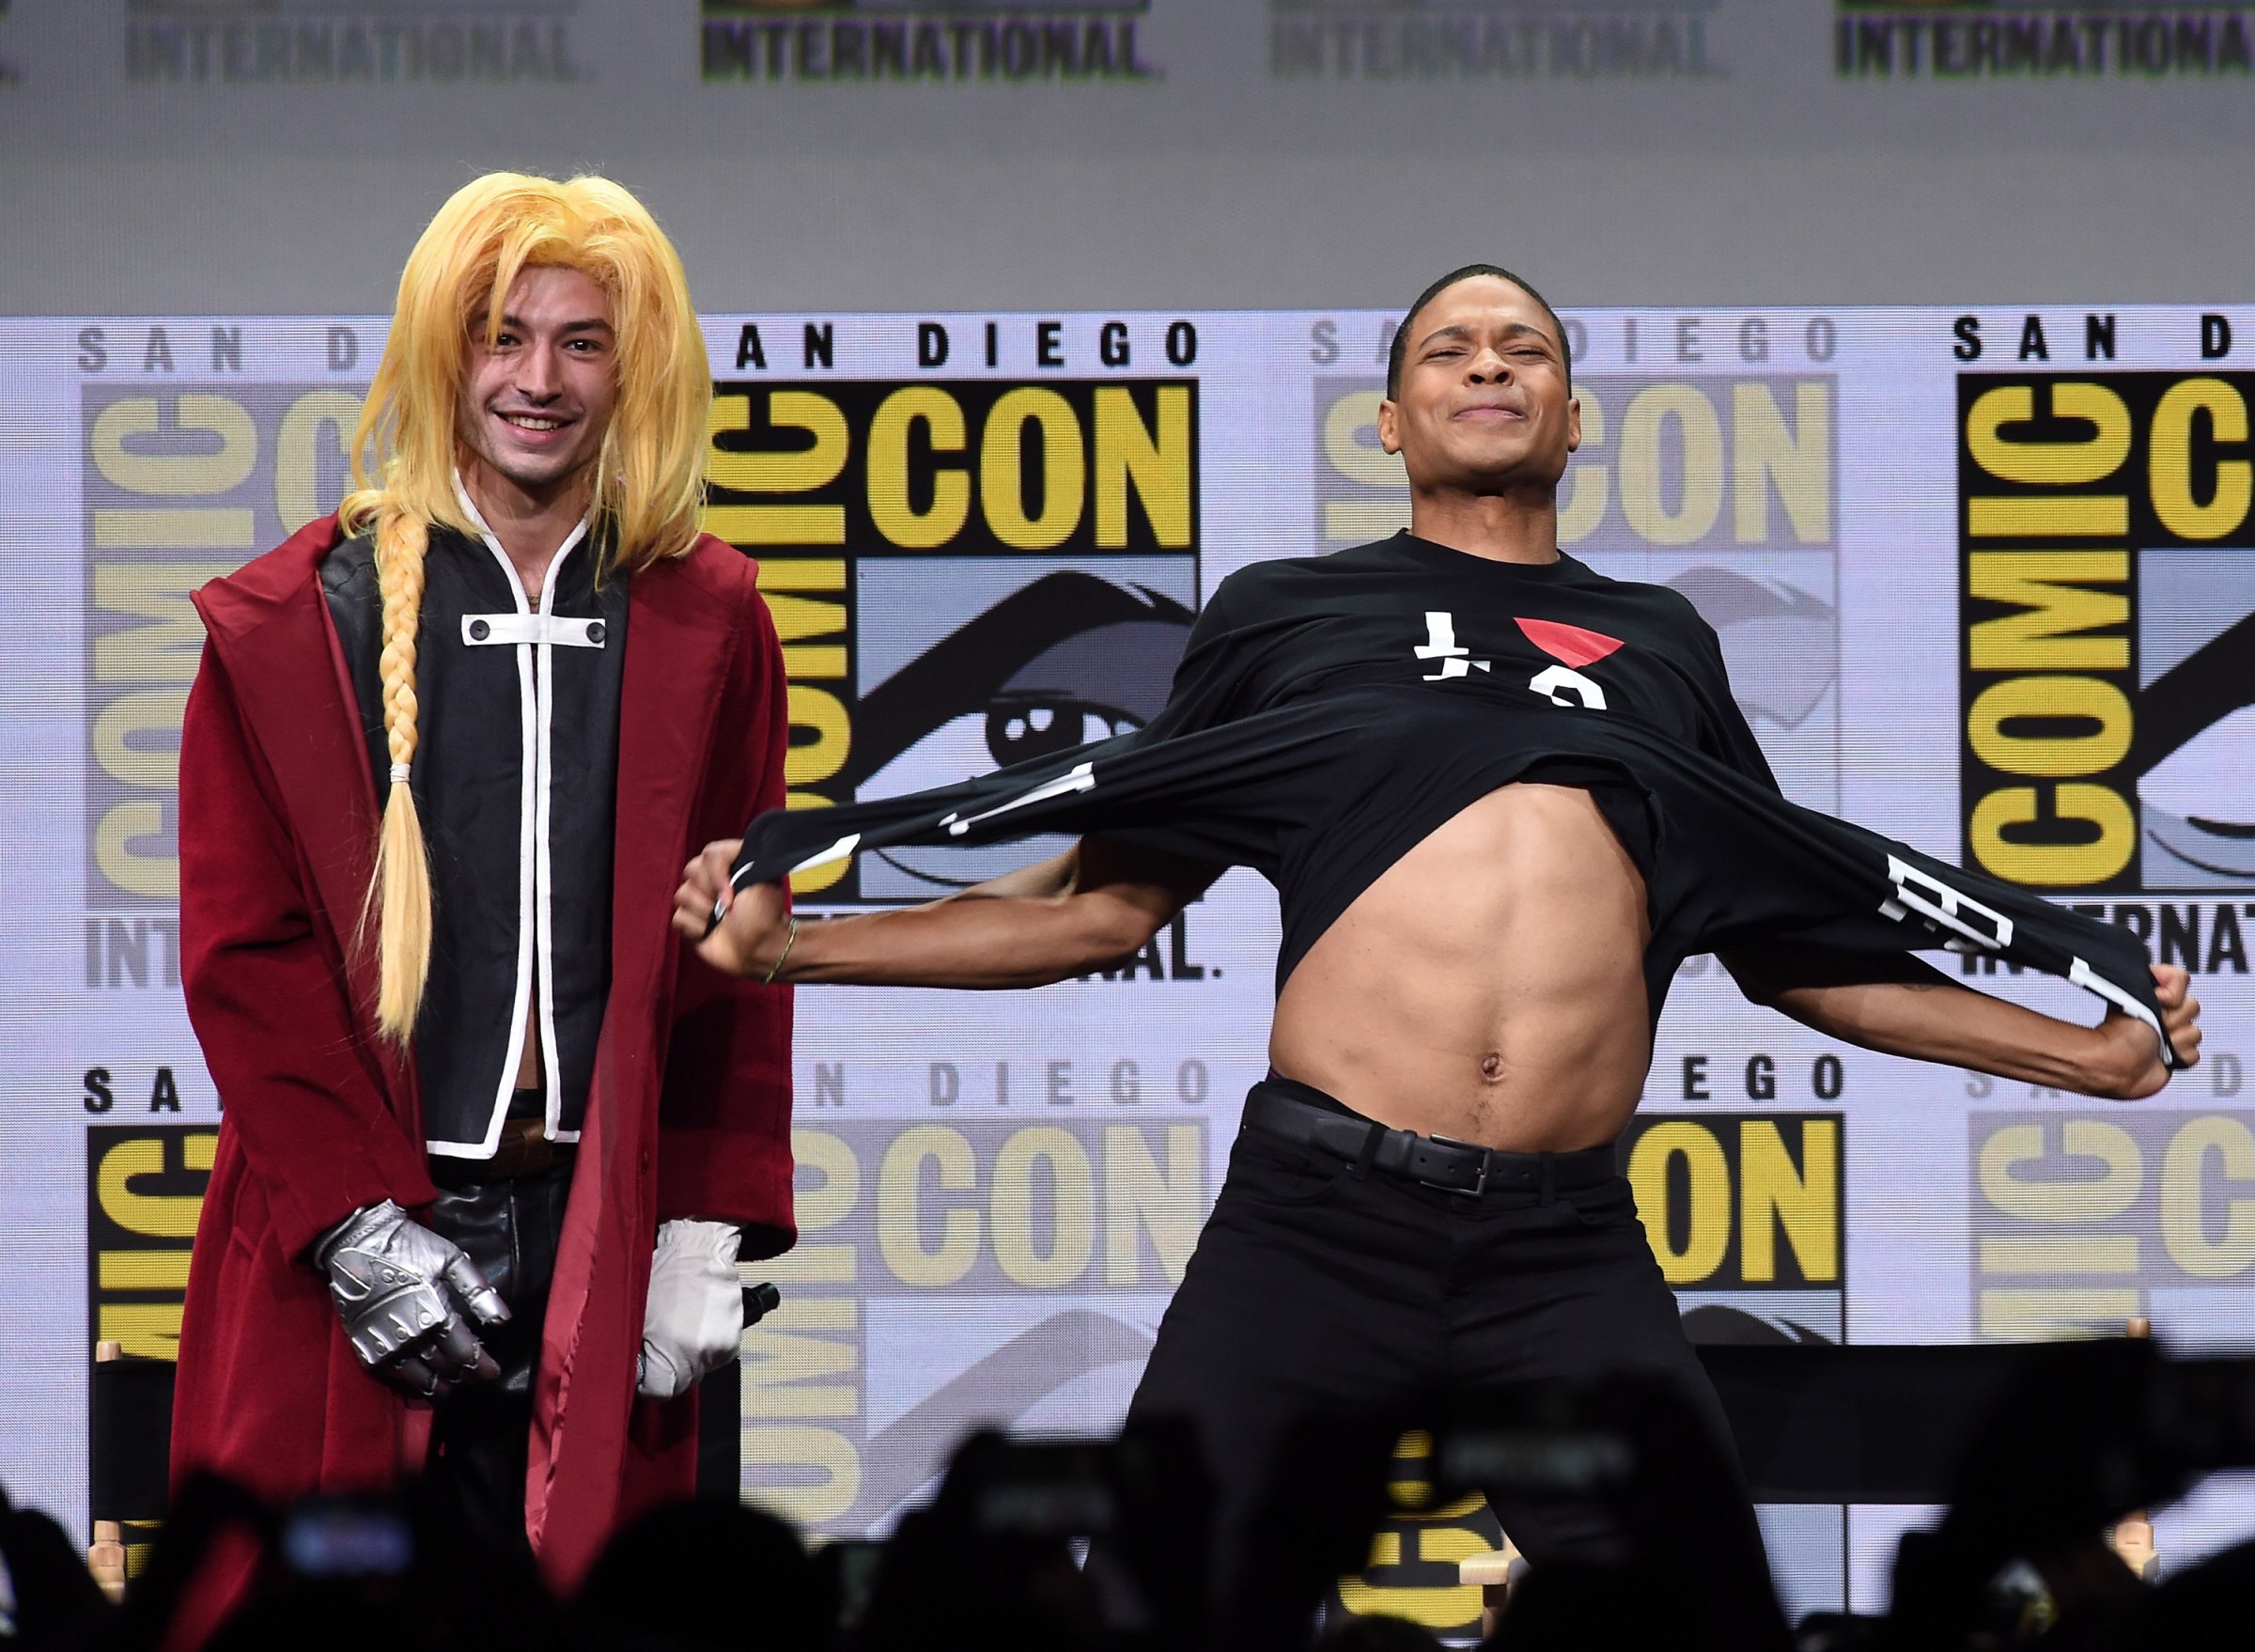 Comic-Con International 2017 - Warner Bros. Pictures Presentation